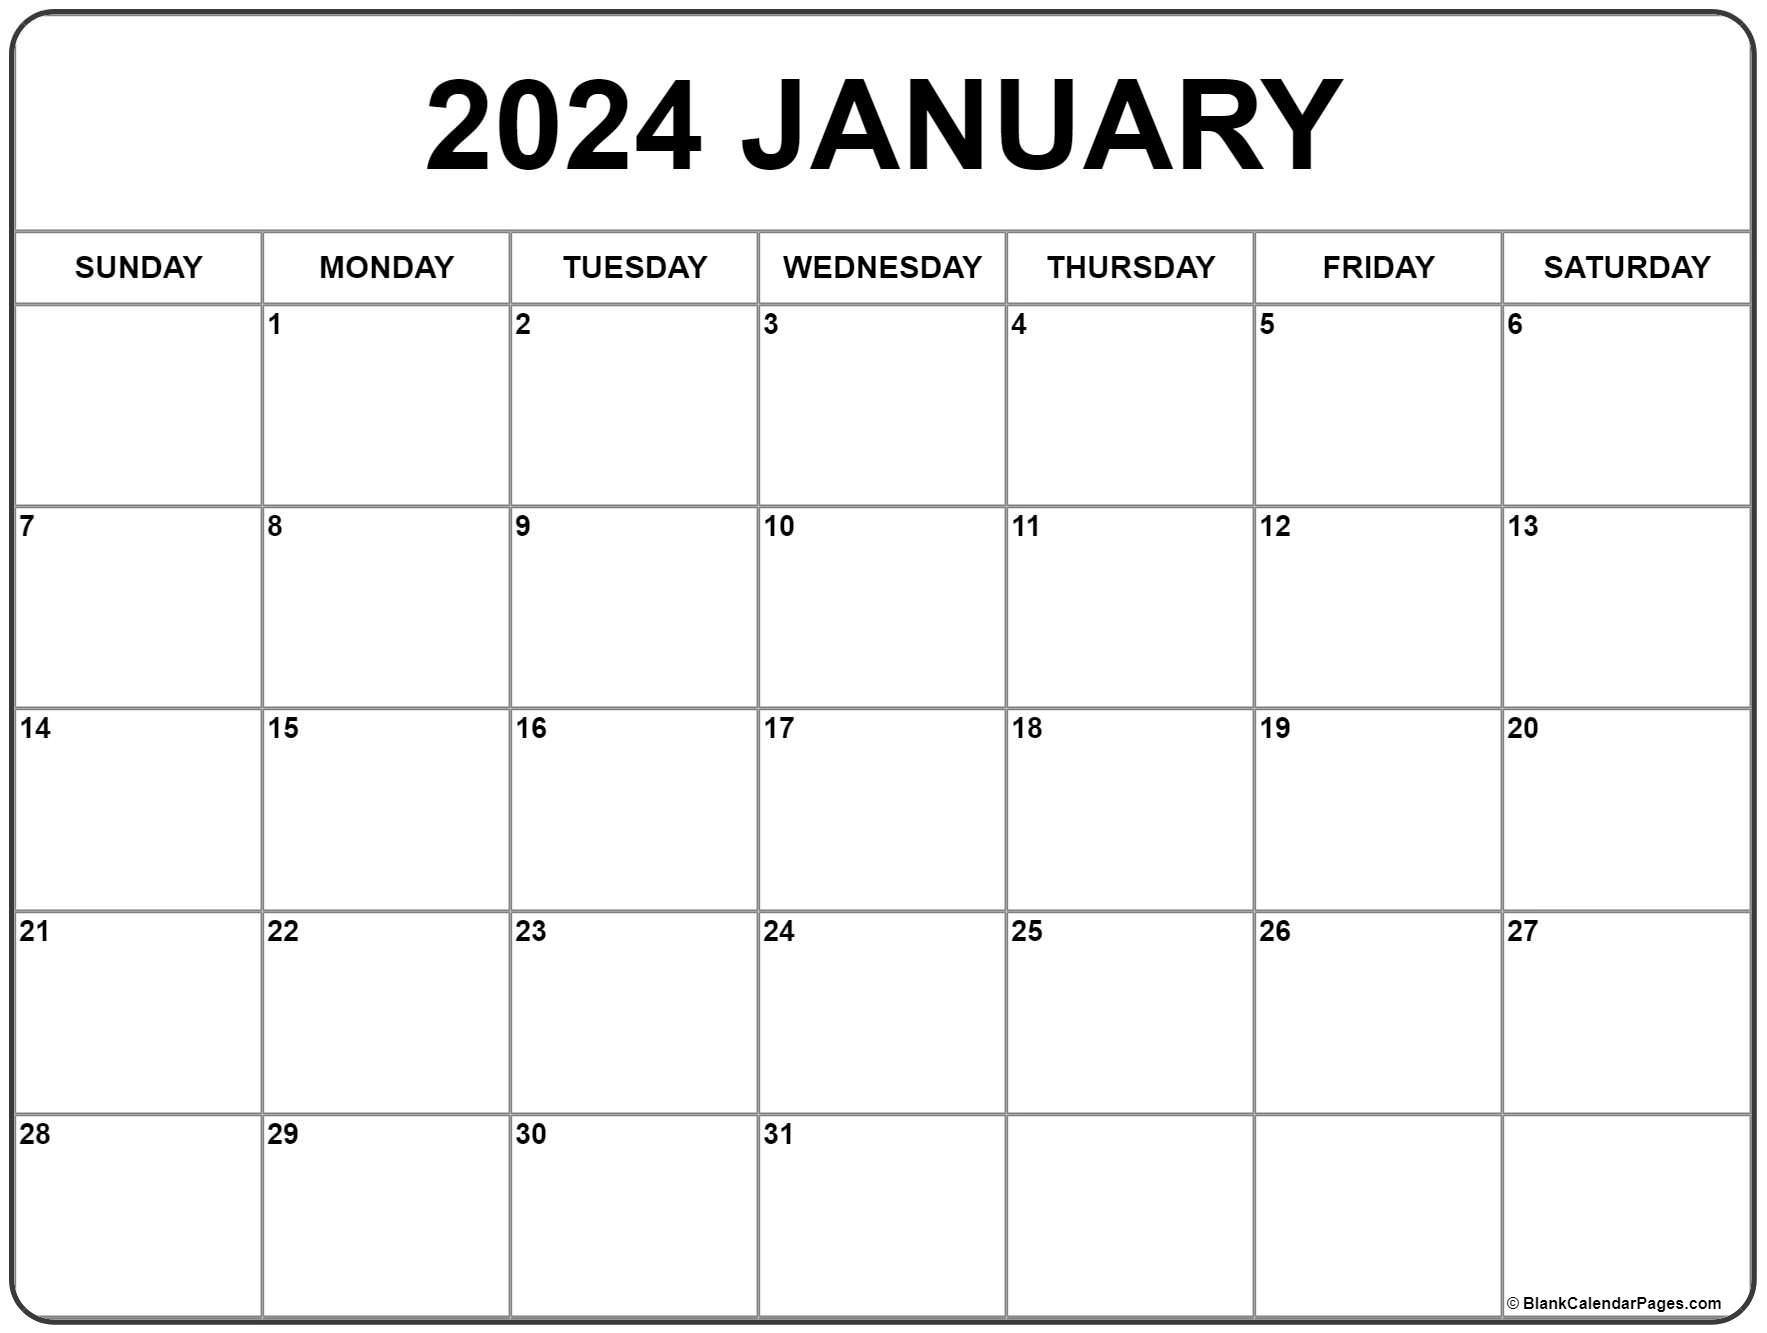 January 2024 Calendar | Free Printable Calendar | Jan 2024 Calendar